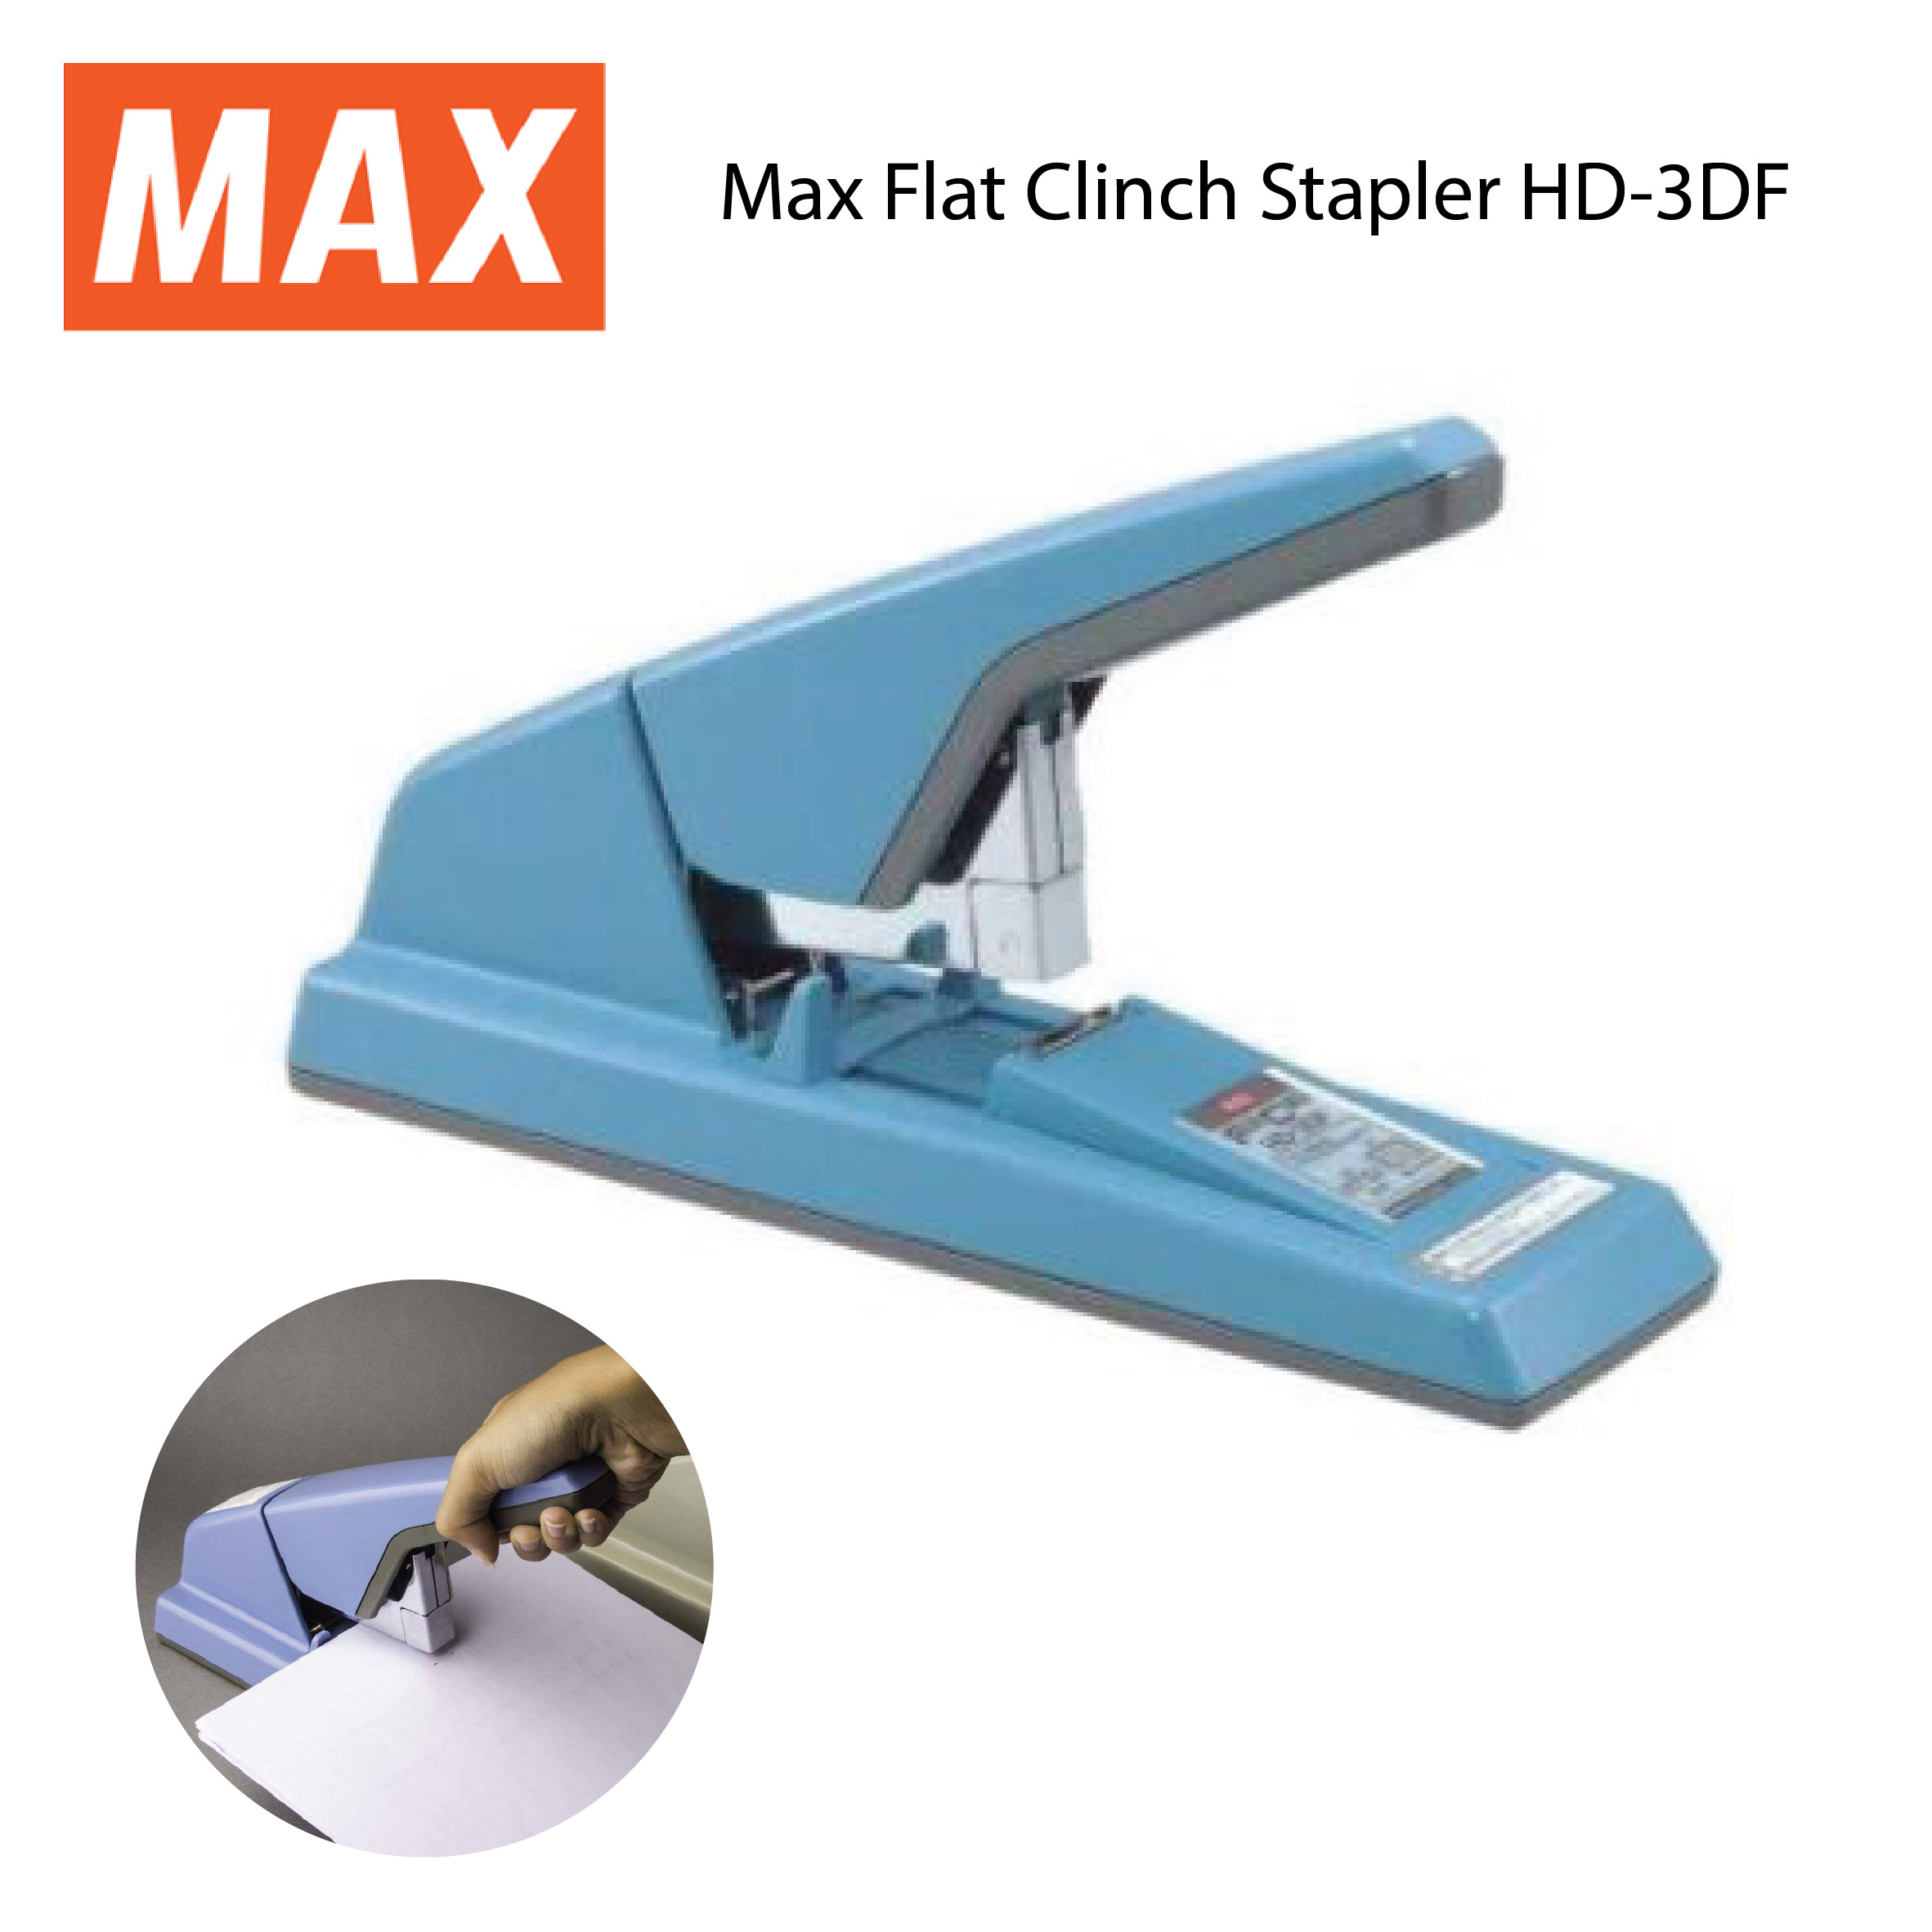 Max Flat Clinch Stapler HD-3DF - Navy Blue